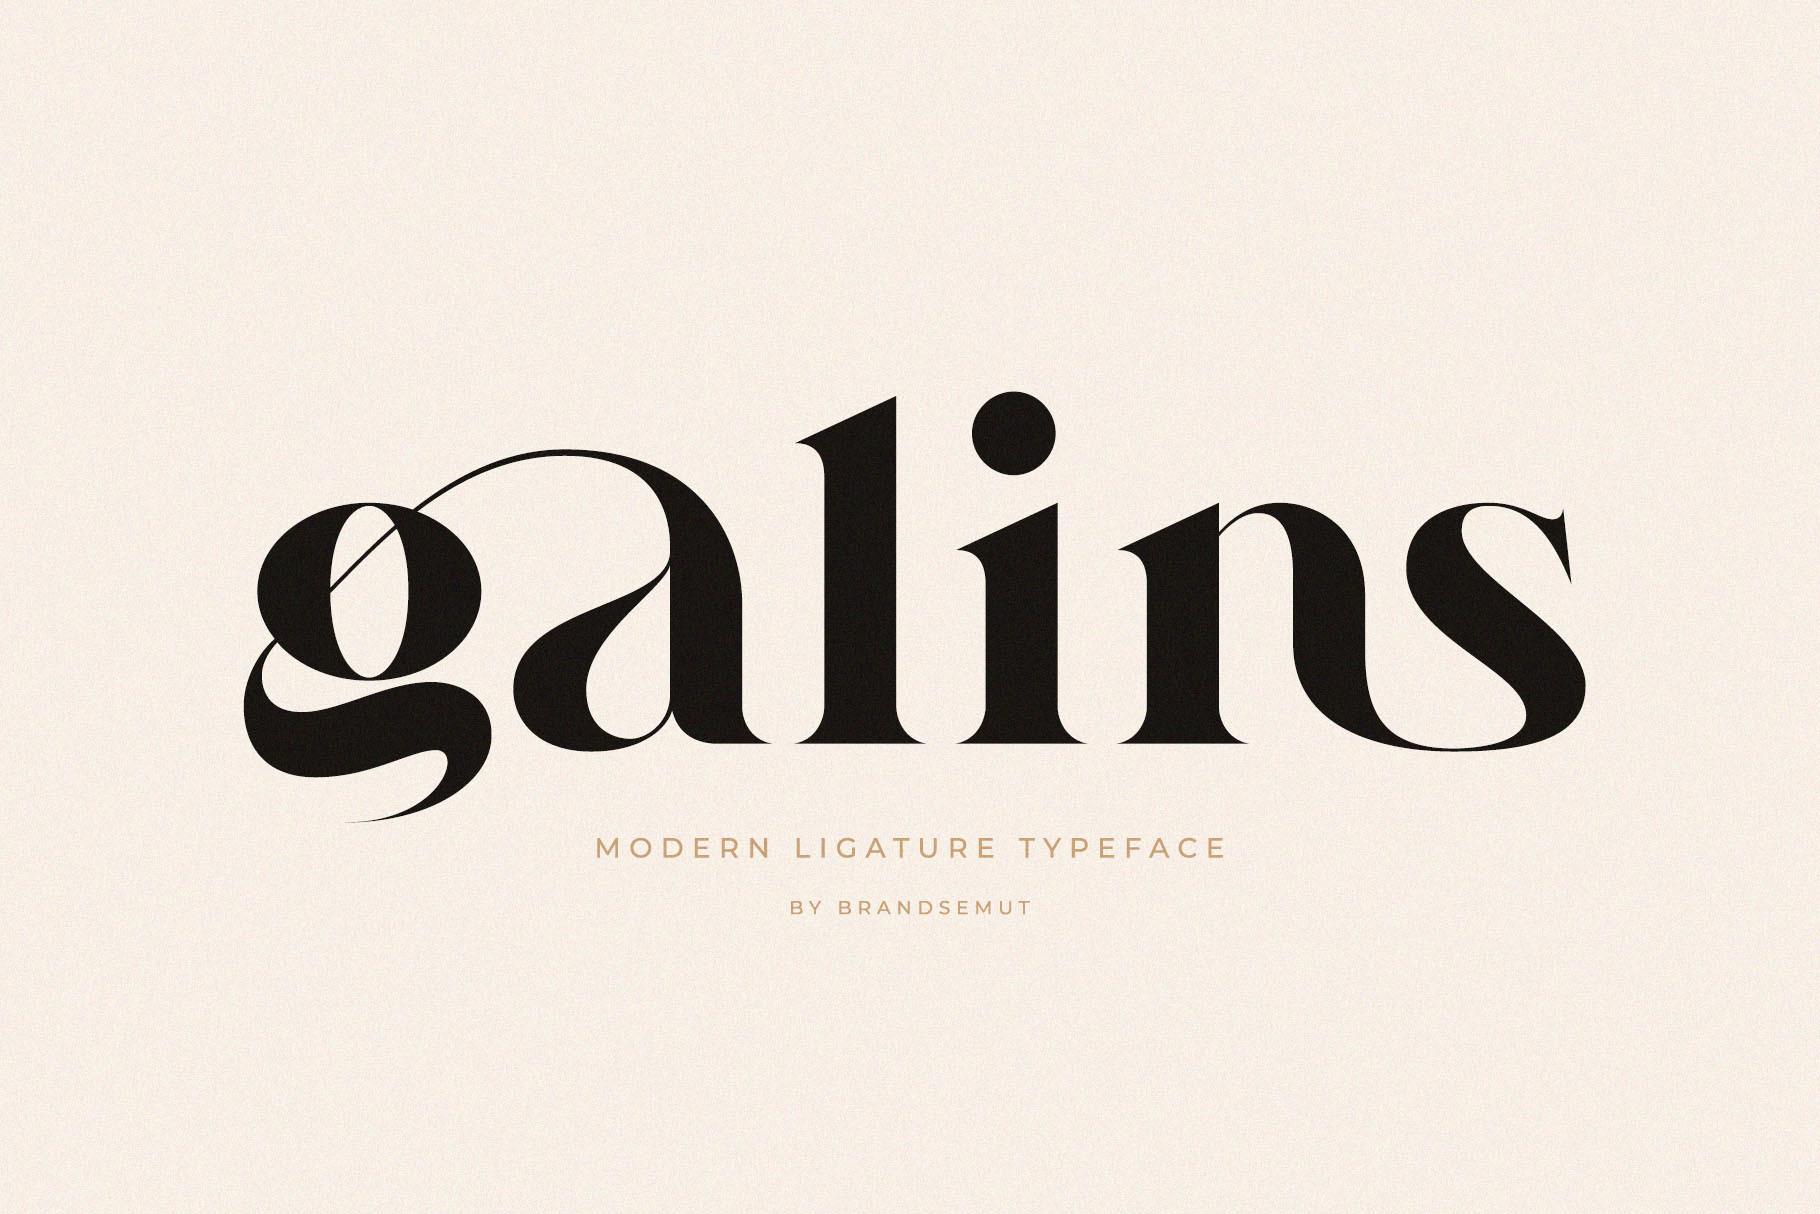 Galins Font